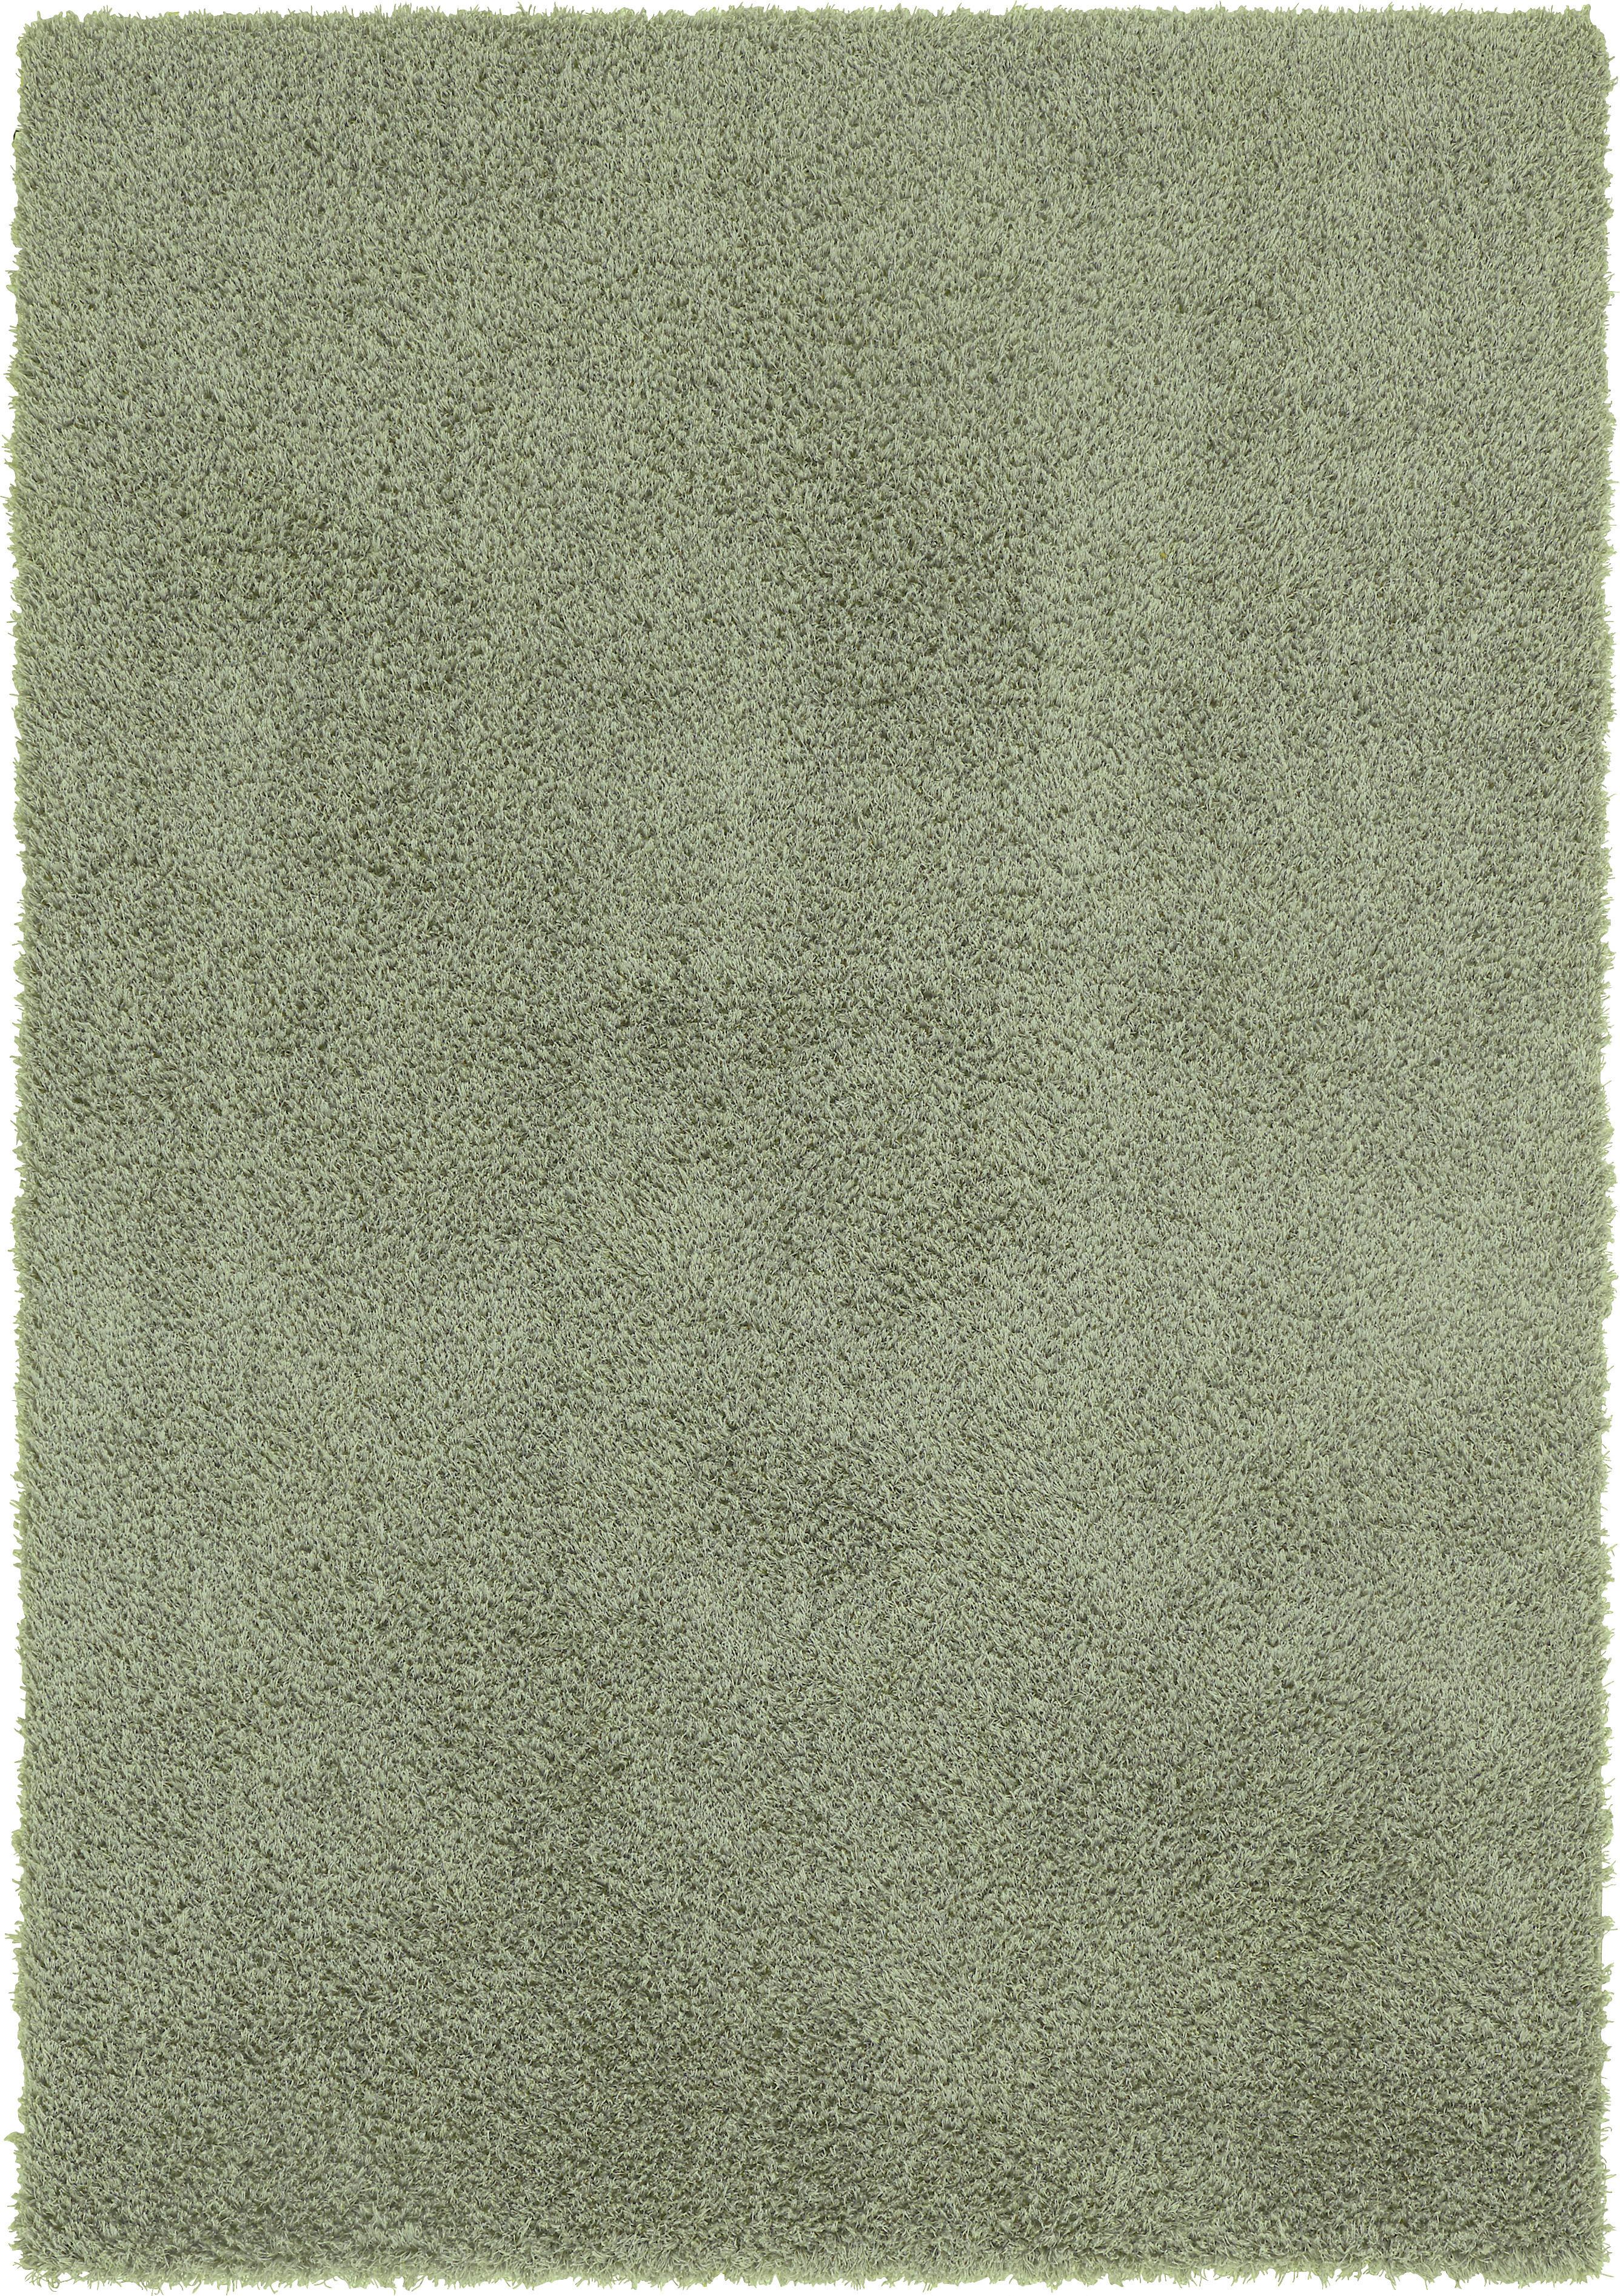 Shaggy Stefan in Grün ca. 120x170cm - Grün, Modern, Textil (120/170cm) - Modern Living